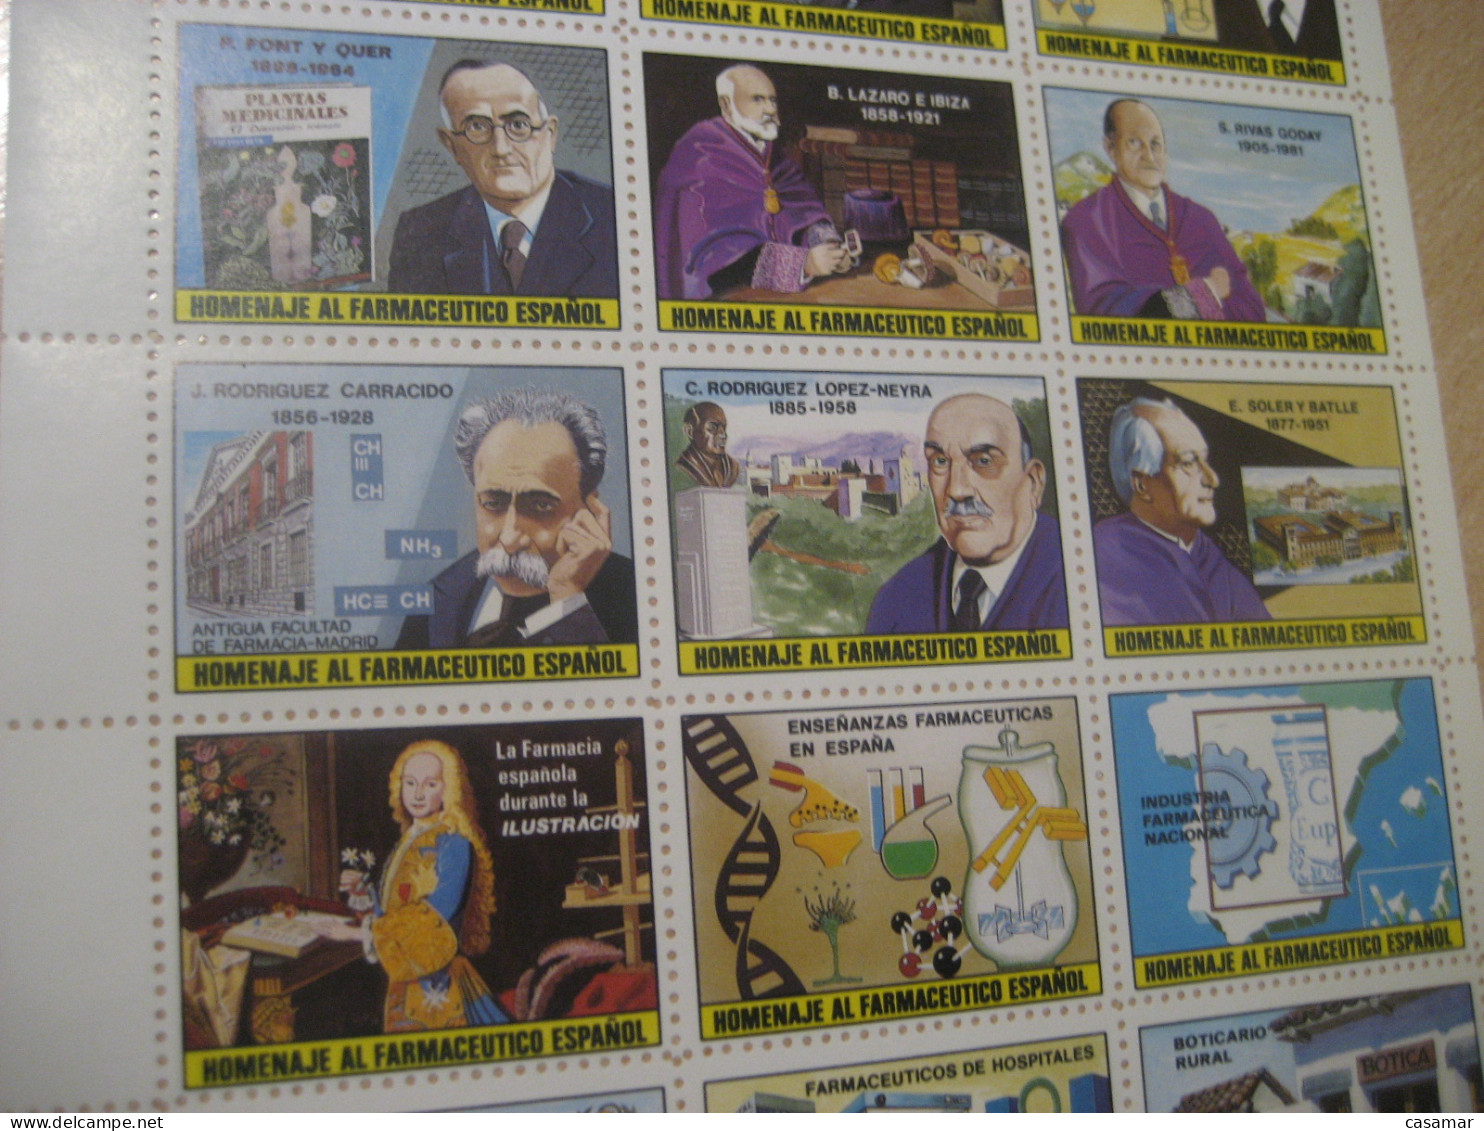 Homenaje Al Farmaceutico Pharmacy Pharmacist 21 Poster Stamp Vignette SPAIN Health Chemical Chemistry - Pharmacy